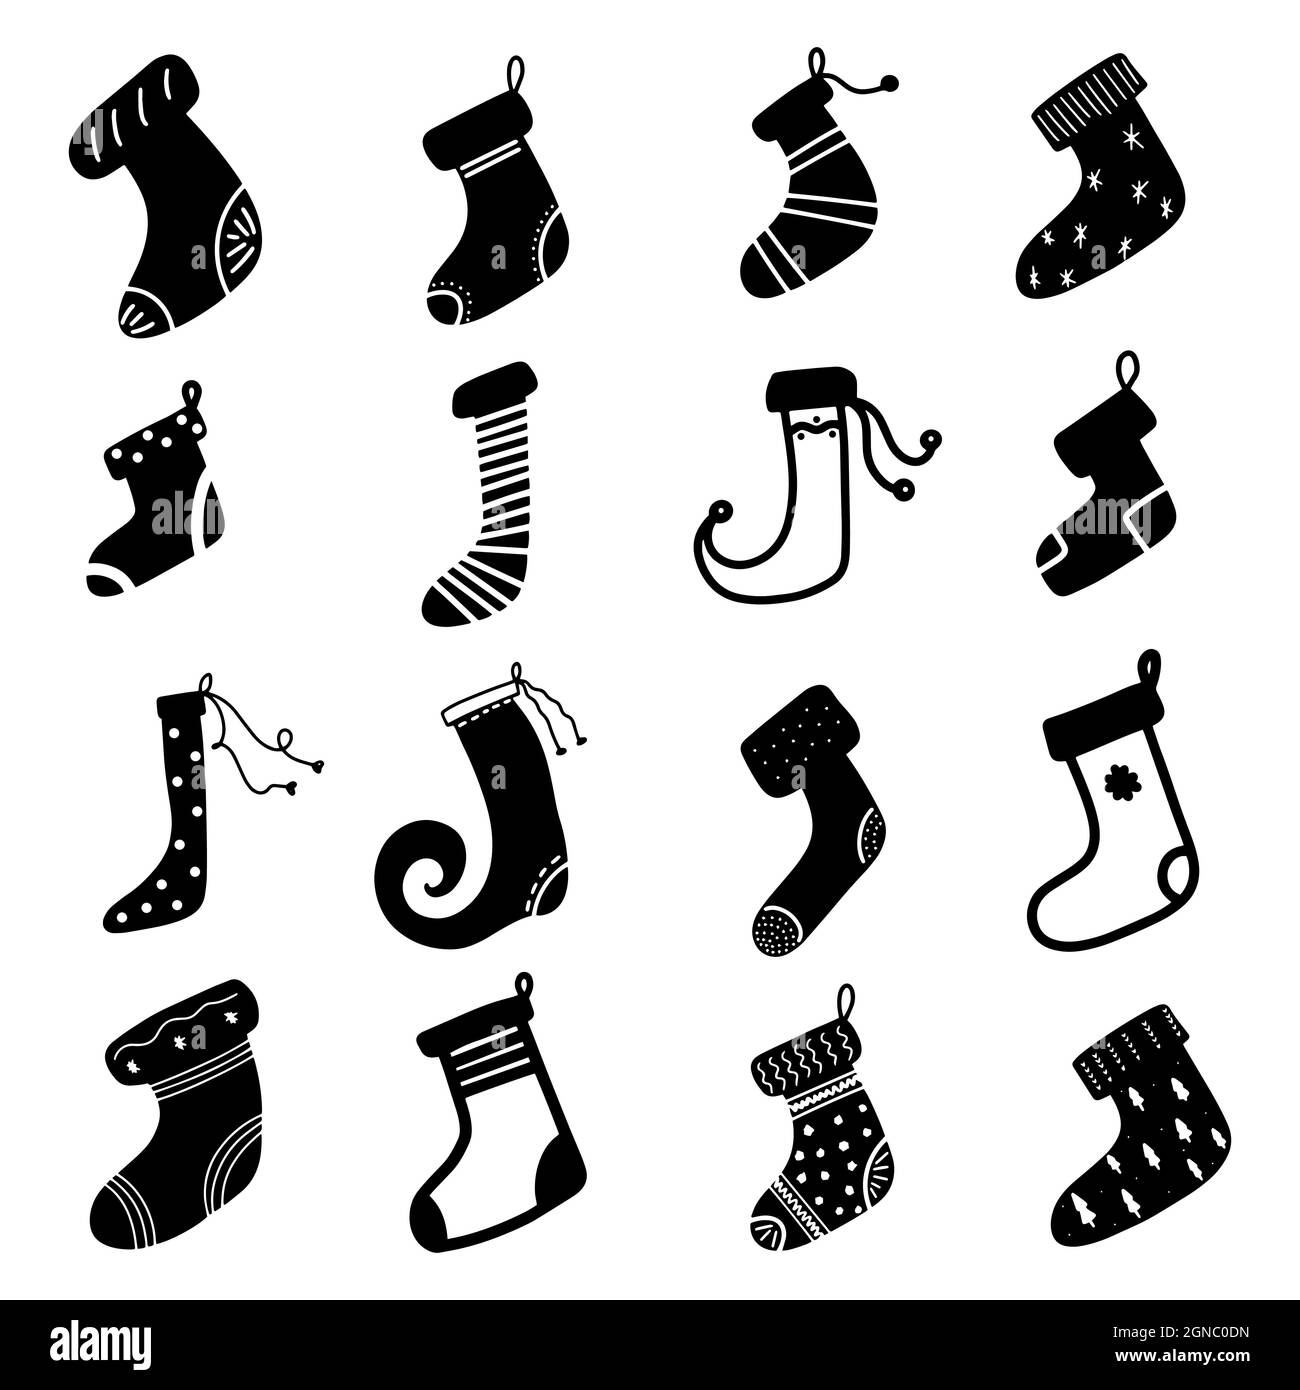 Santa Socks vector illustration graphic design element set. Black Xmas sock gift present footwear. Calligraphy winter feet clothes laces for children Stock Vector